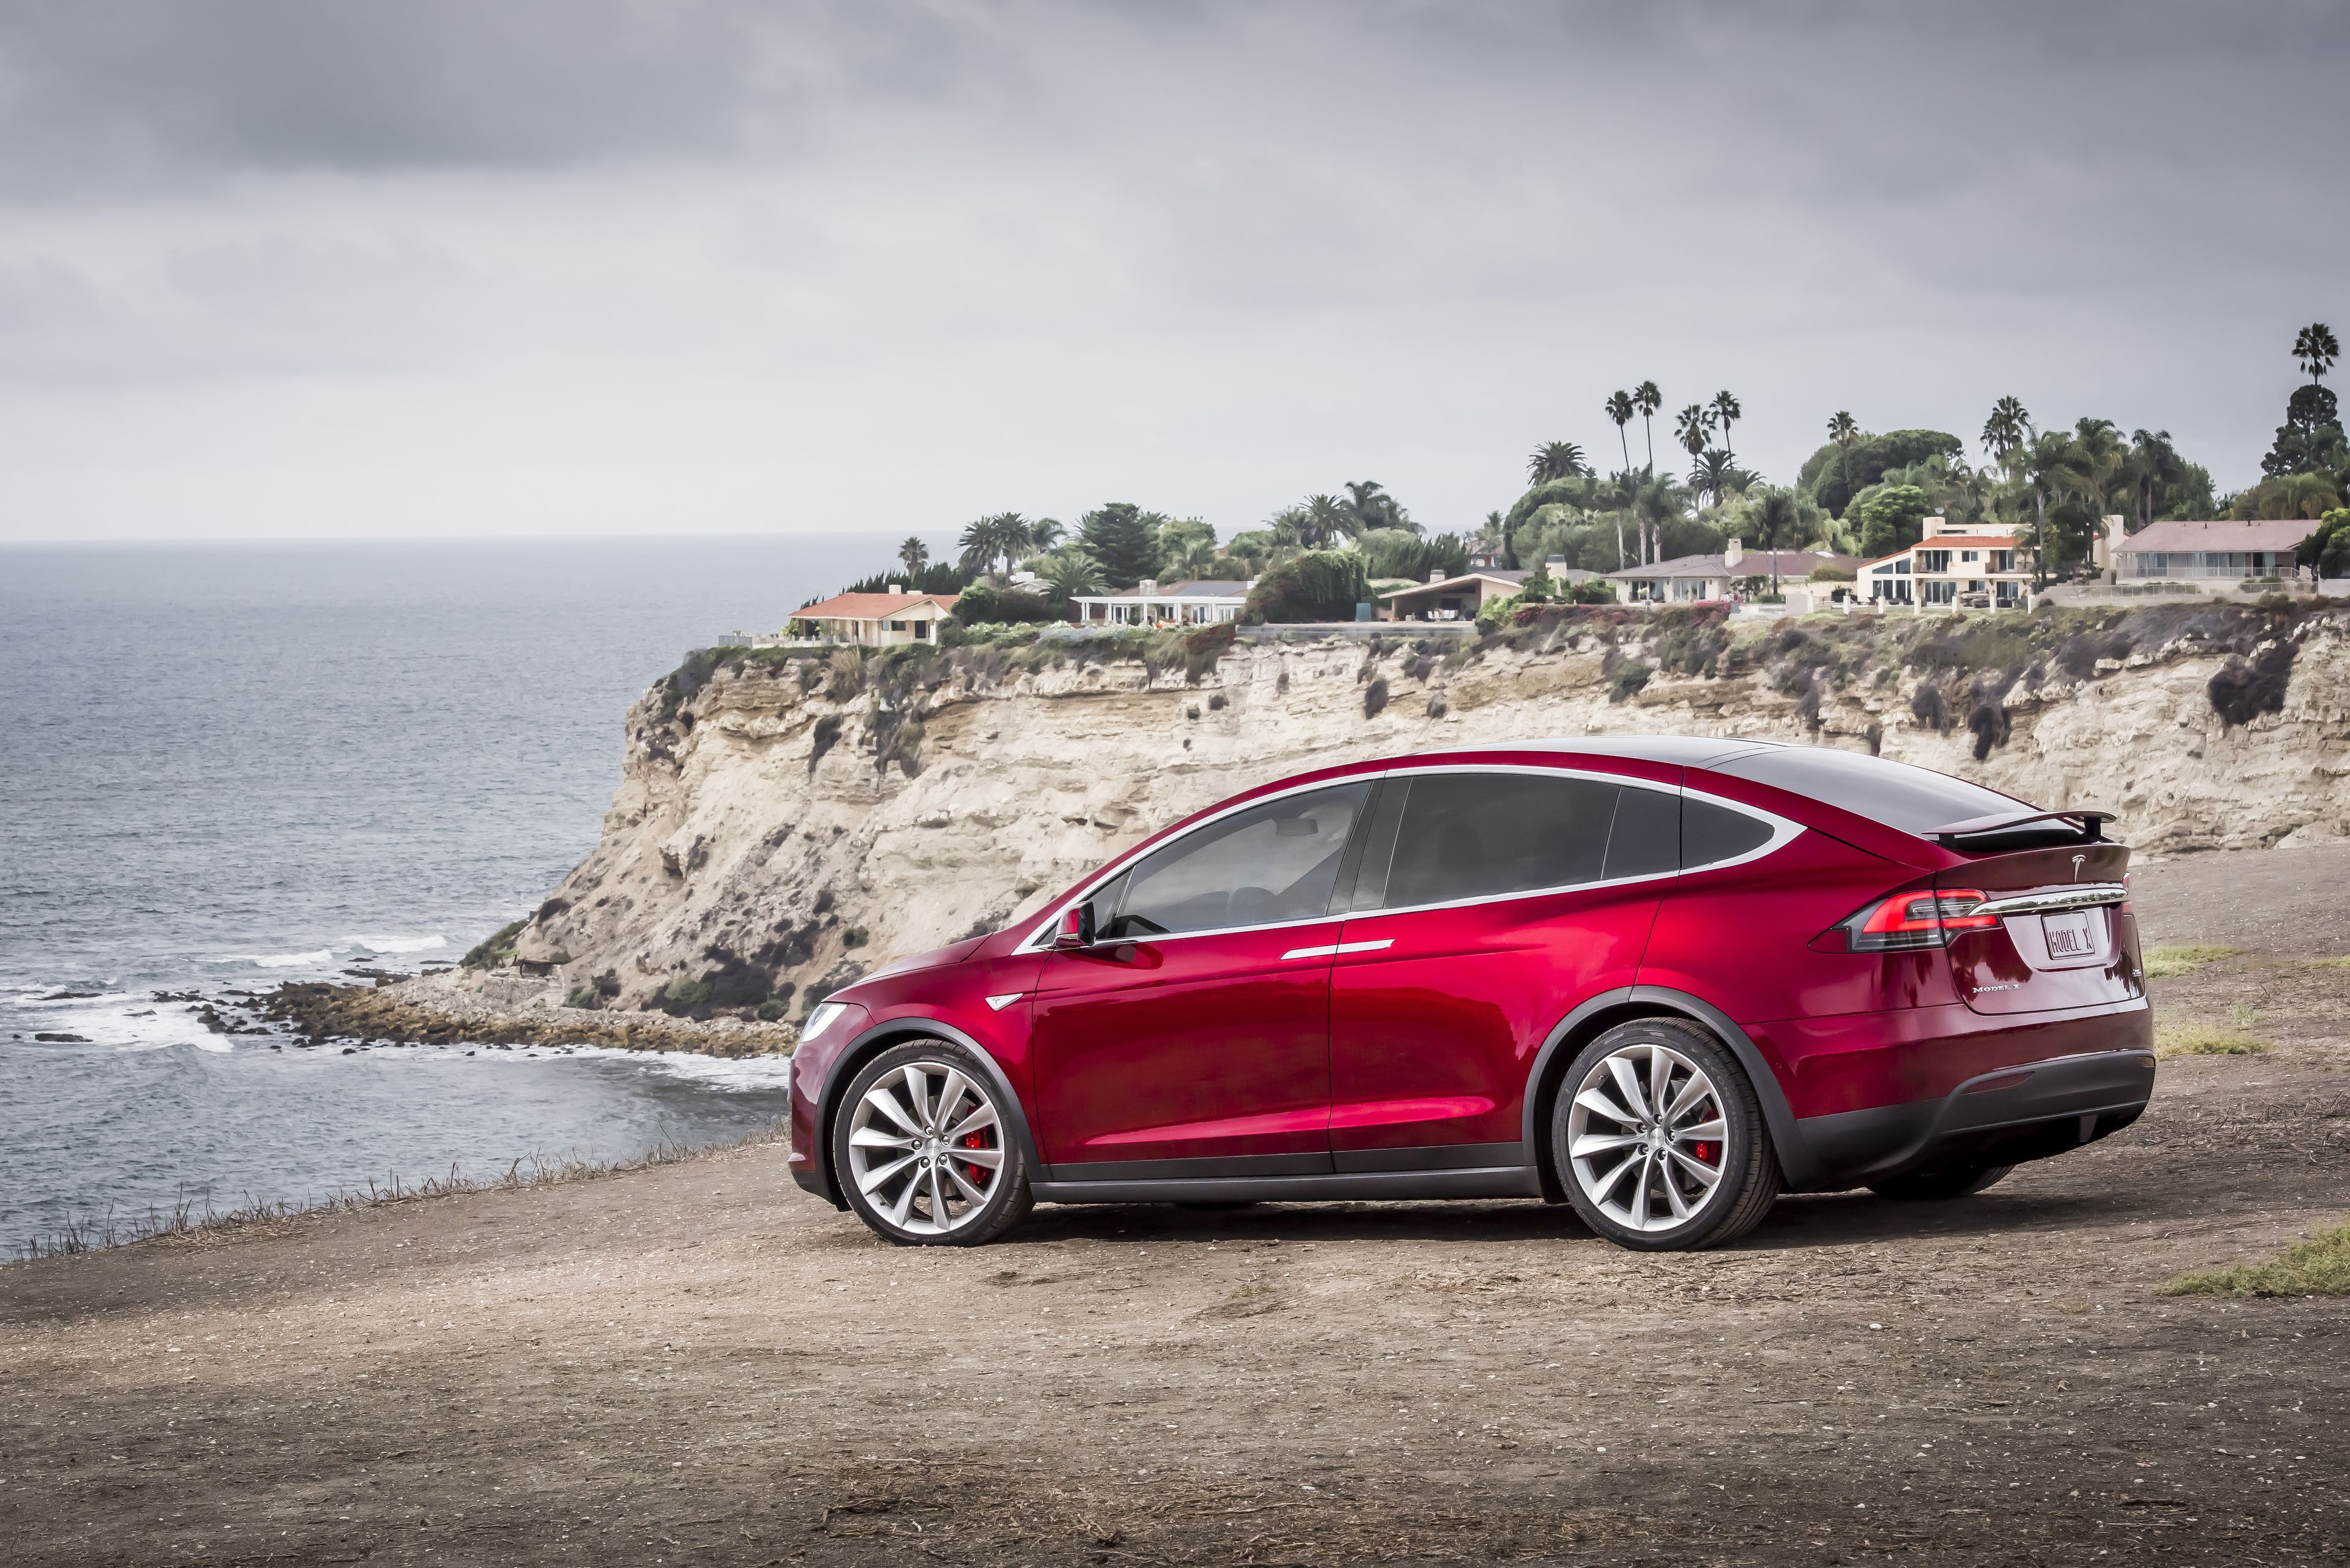 Wallpaper Wednesday: Tesla Model X Black & Red